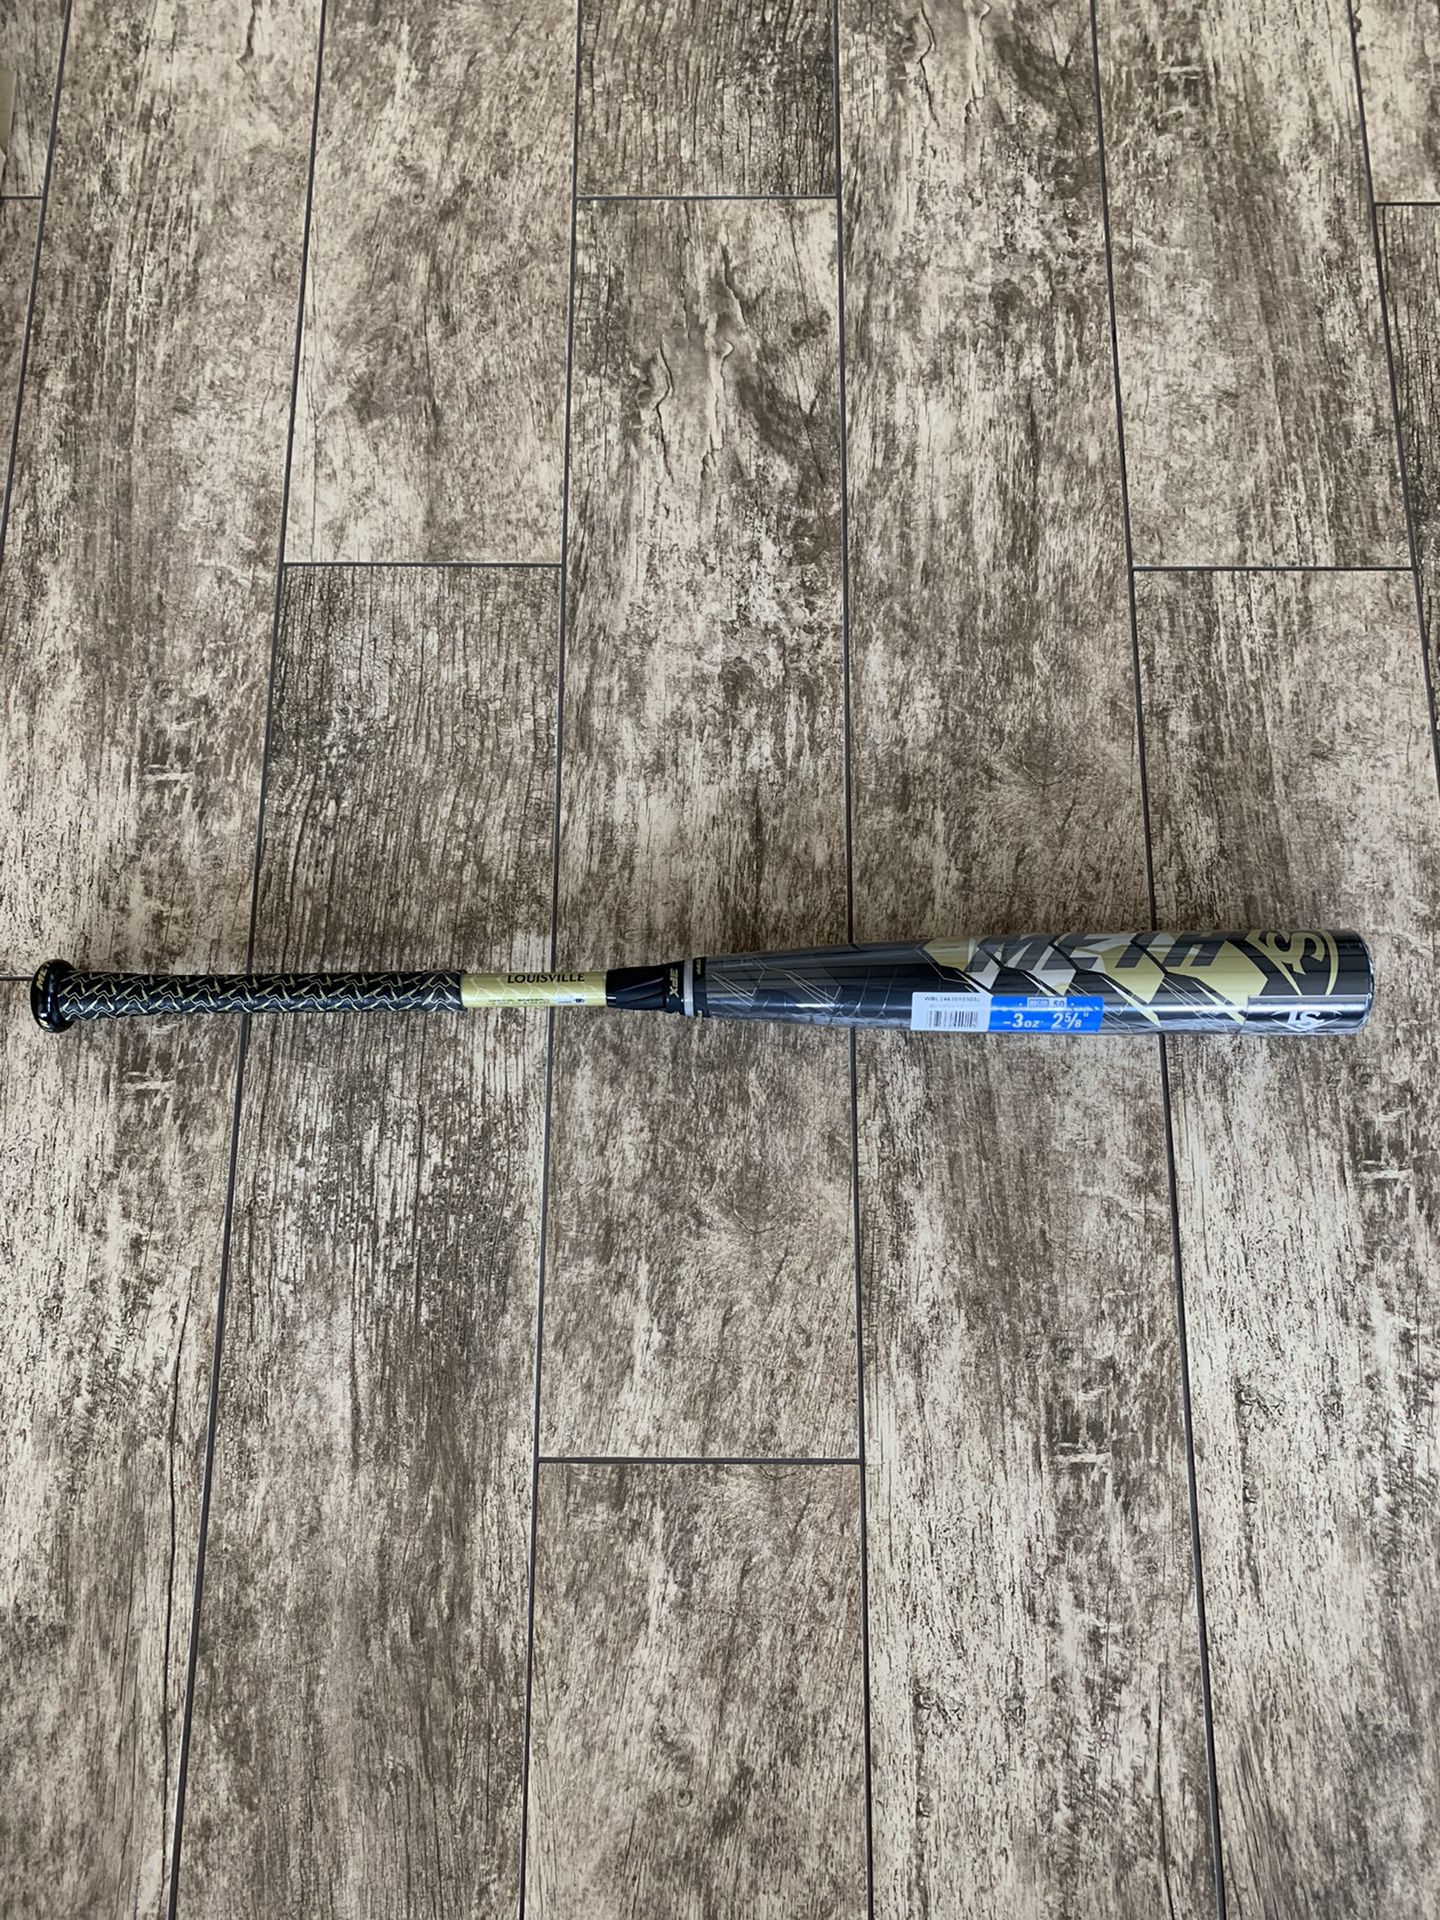 2021 Louisville Meta BBCOR 33” baseball bat